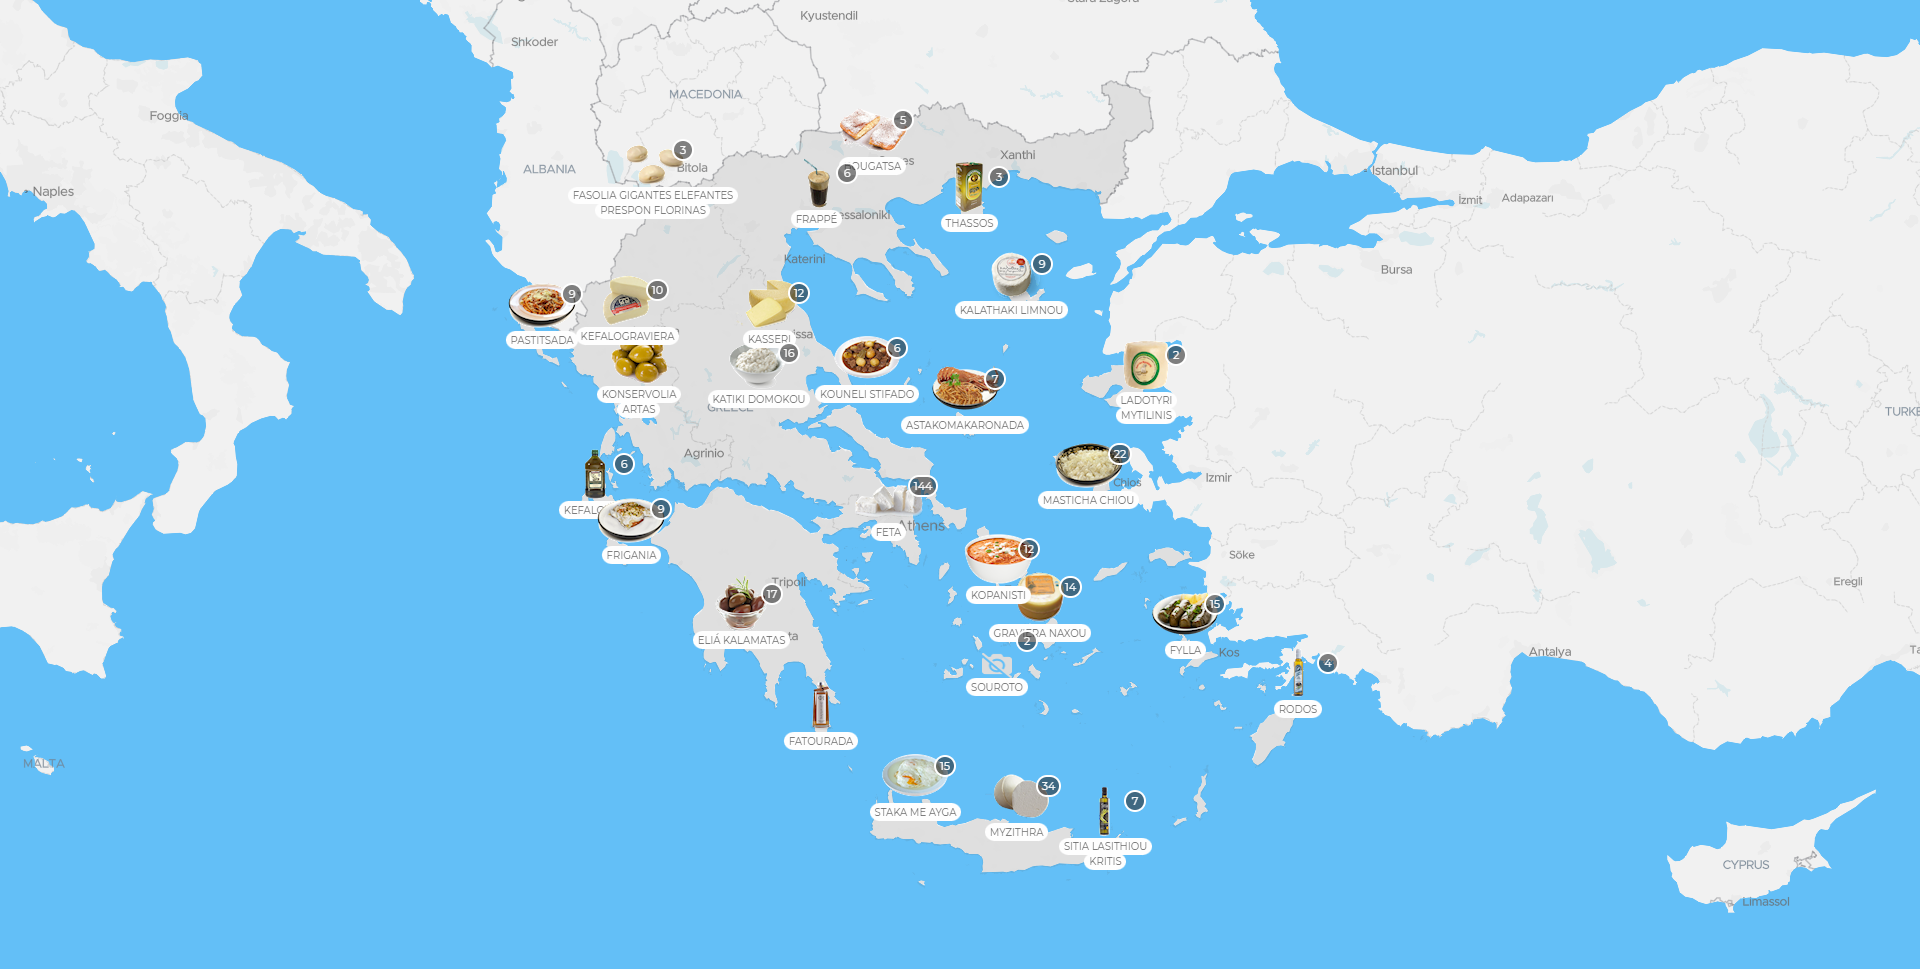 TasteAtlas: Ποια είναι τα δύο χειρότερα ελληνικά φαγητά, σύμφωνα με τους ταξιδιώτες;